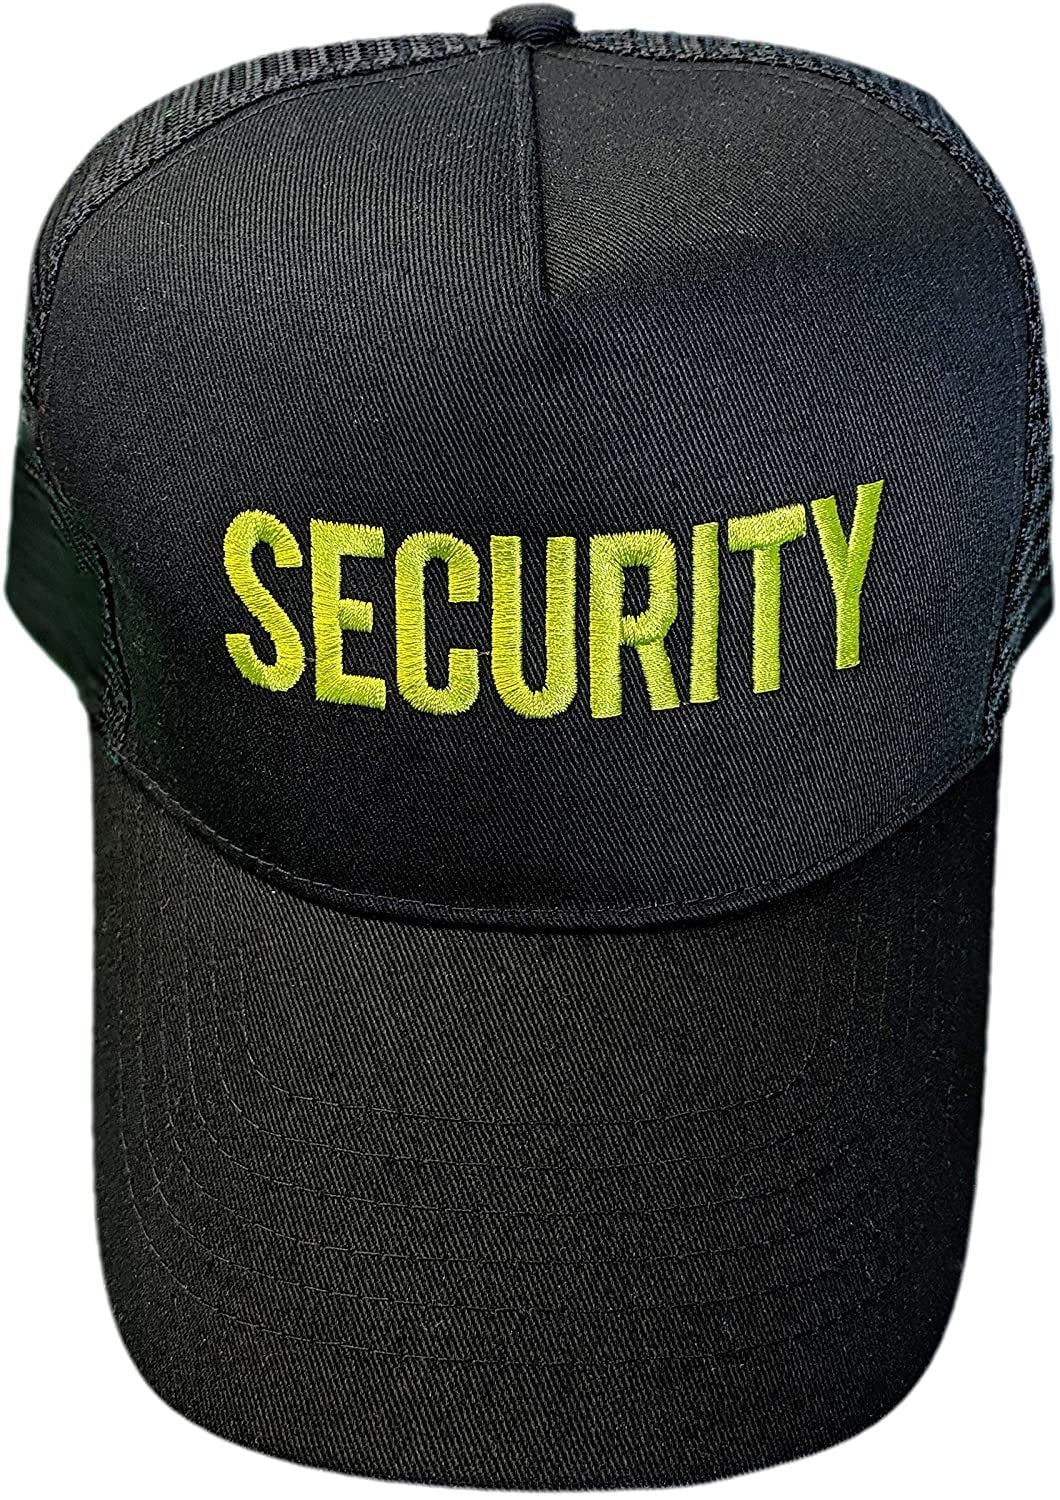 Security Baseball Trucker Hat  (Black/Neon)